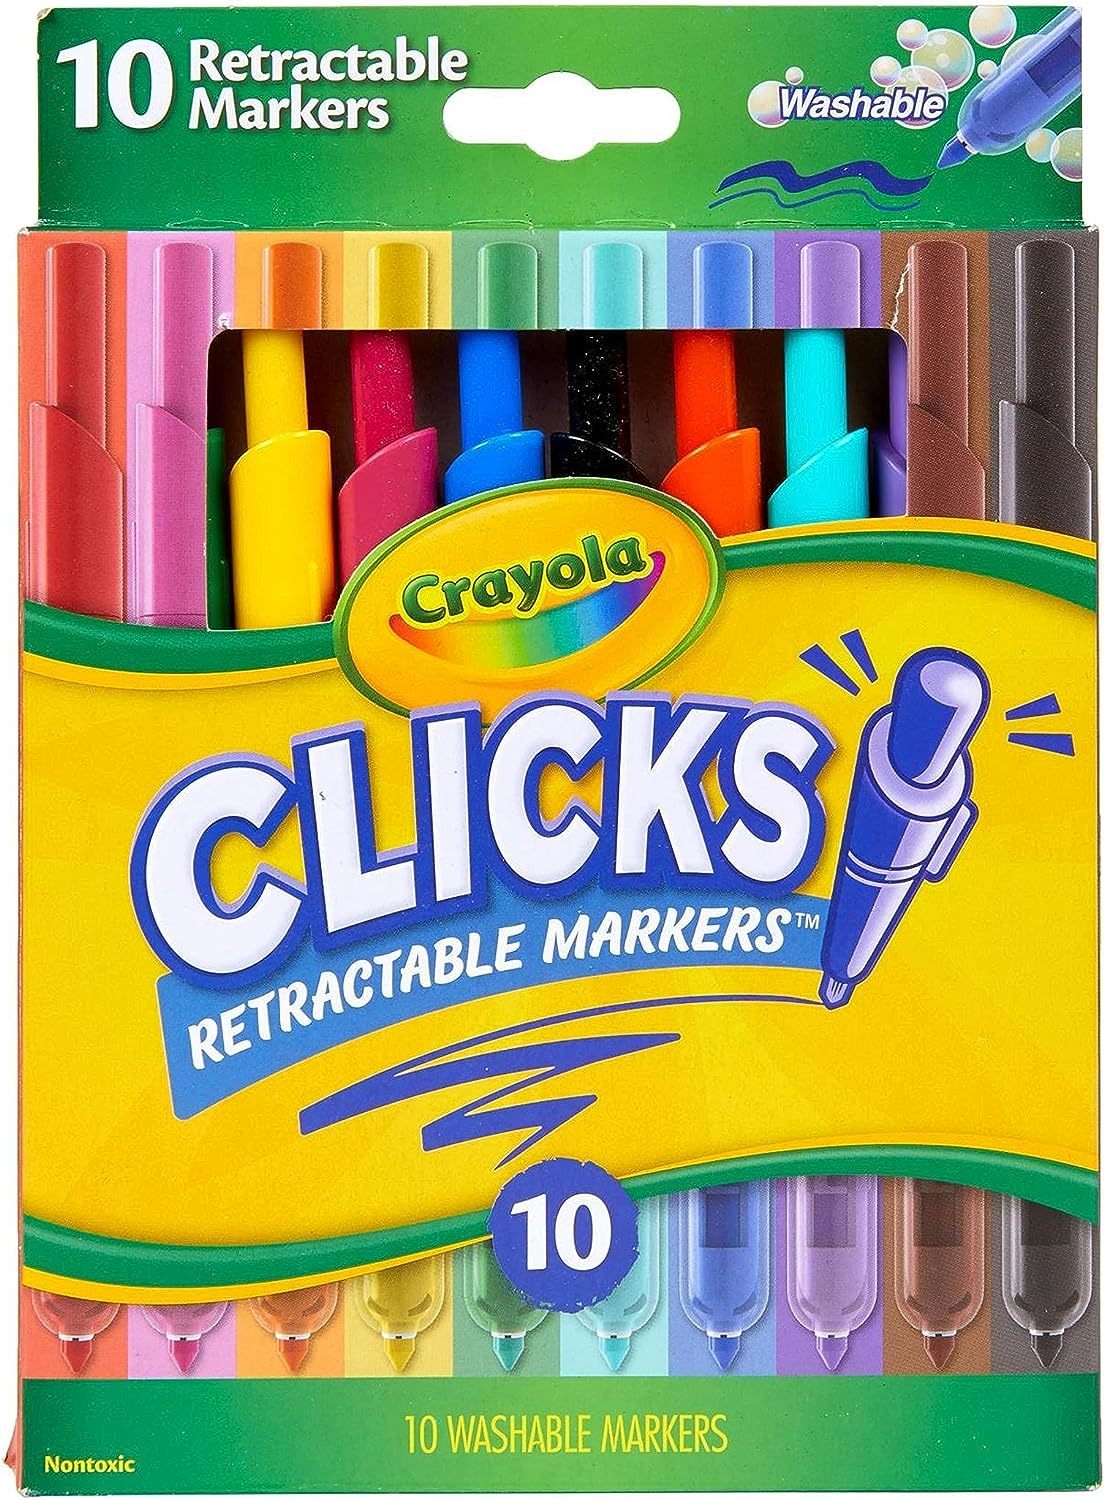 Crayola Clicks Retractable Washable Markers 10 Pack School Supplies Art Markers. - $20.00